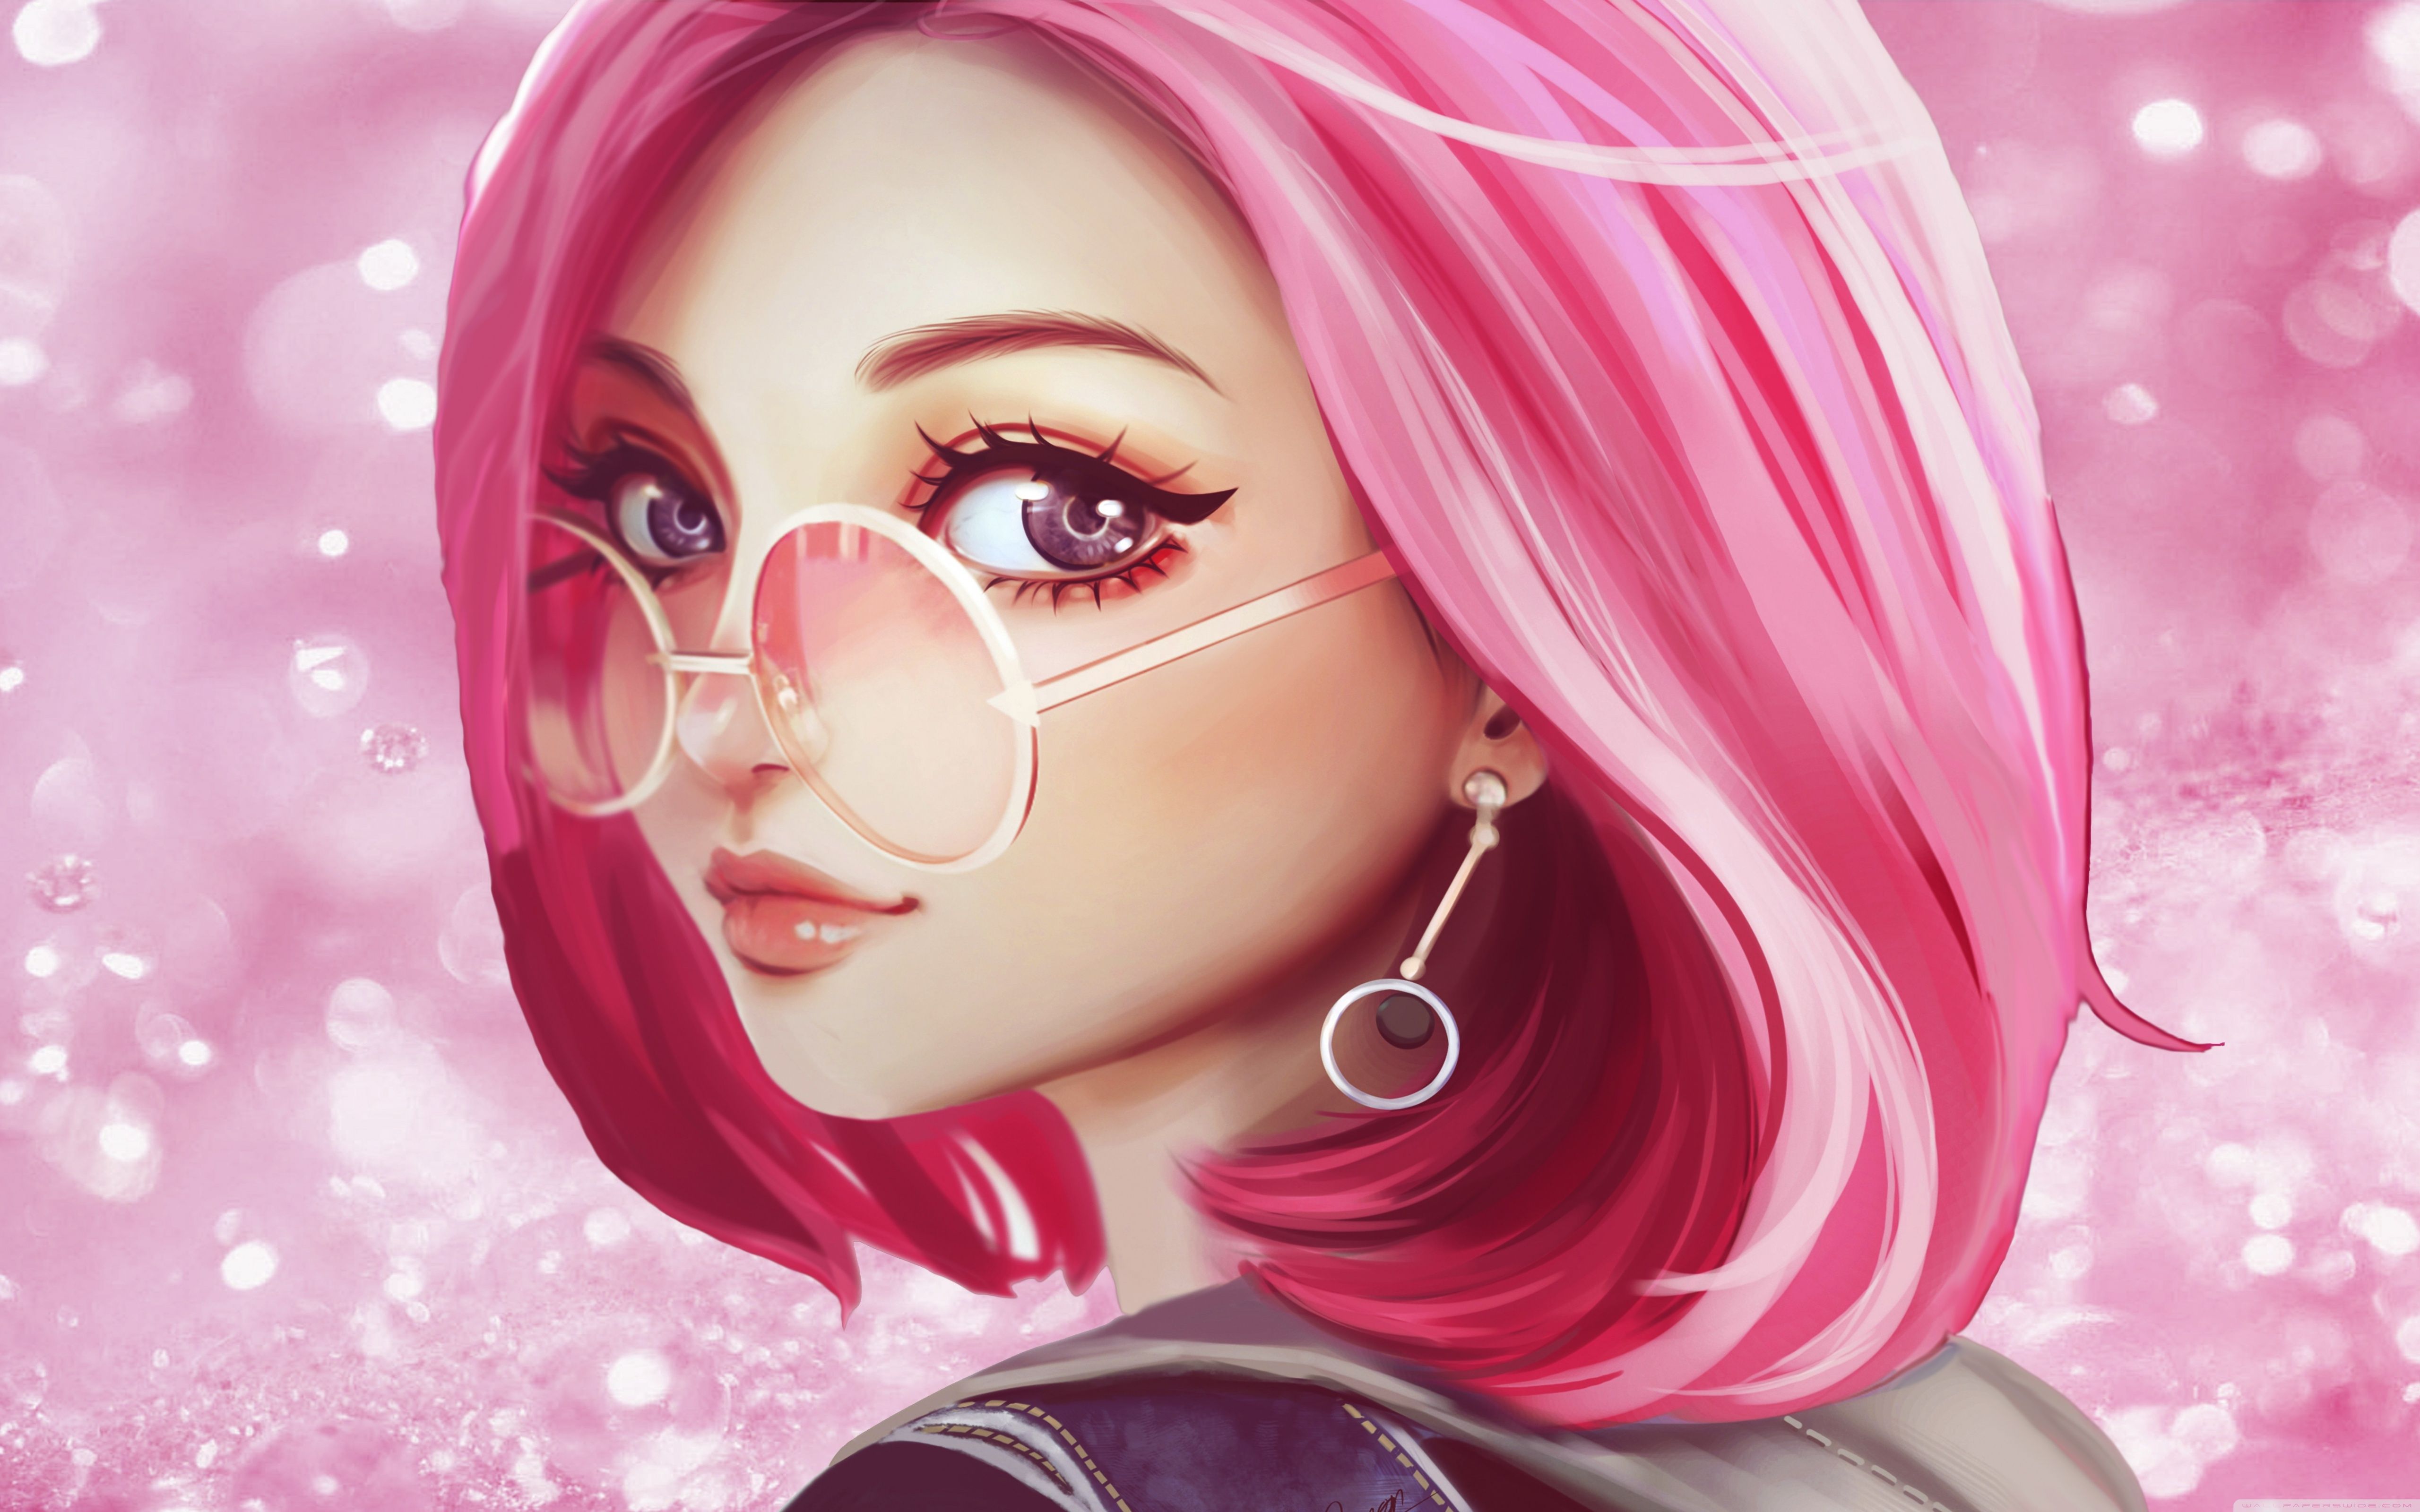 Cute Girl Pink Hair Sunglasses Digital Art Drawing Ultra HD Desktop Background Wallpaper for 4K UHD TV, Widescreen & UltraWide Desktop & Laptop, Multi Display, Dual & Triple Monitor, Tablet